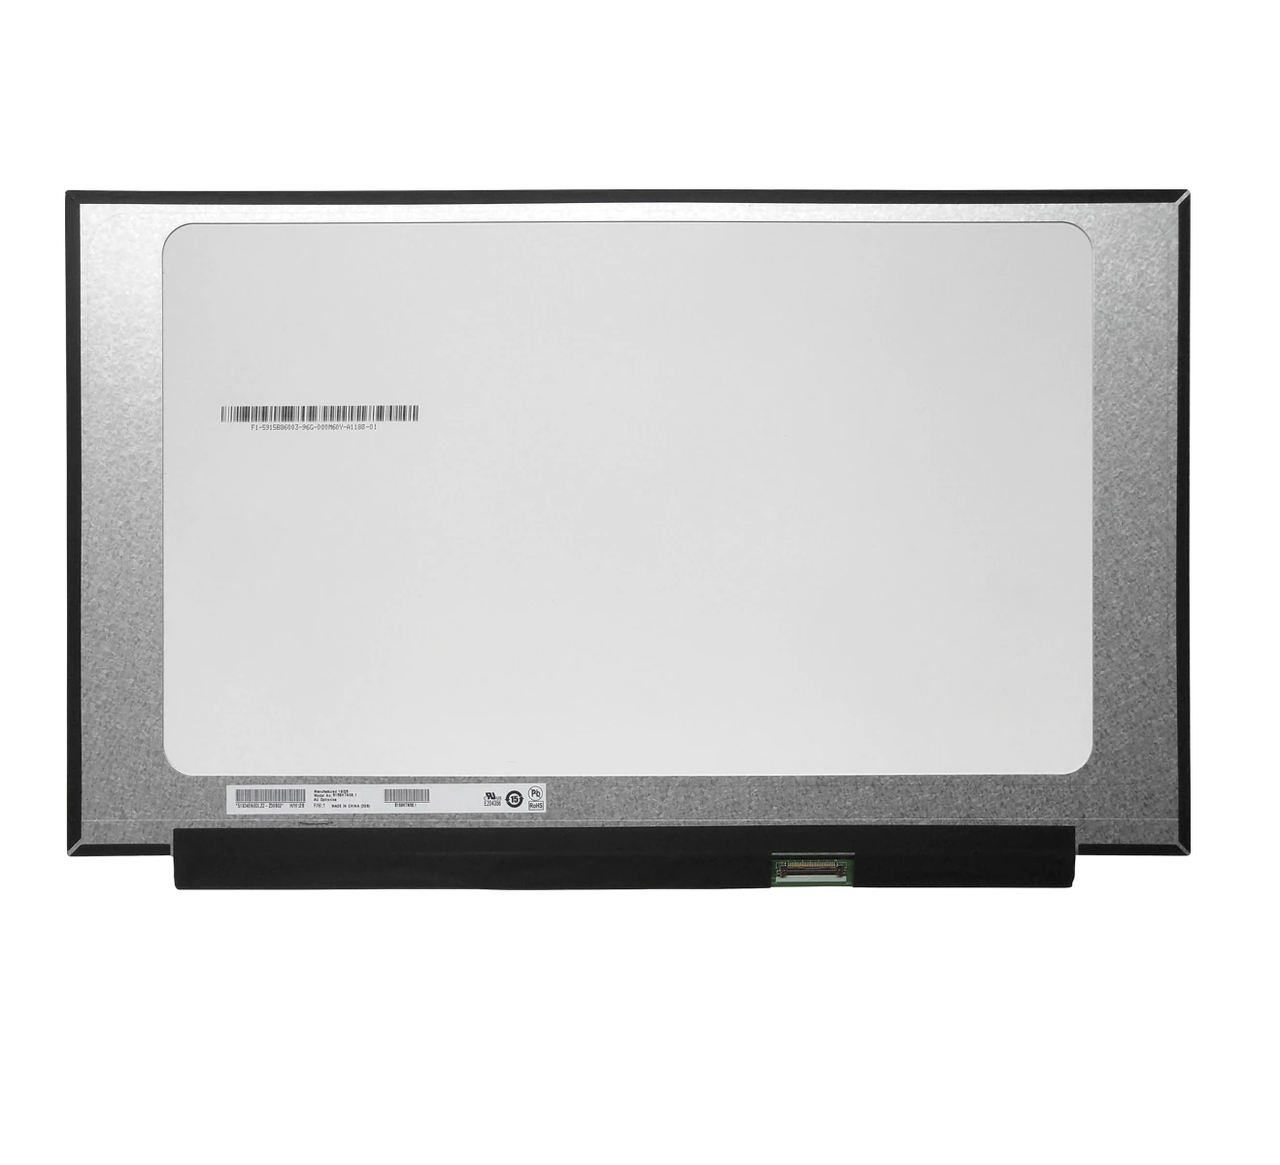 Матрица (экран) для ноутбука Sharp LQ156M1JW07, 15,6 40 eDp Slim, 1920x1080, IPS, 240Hz